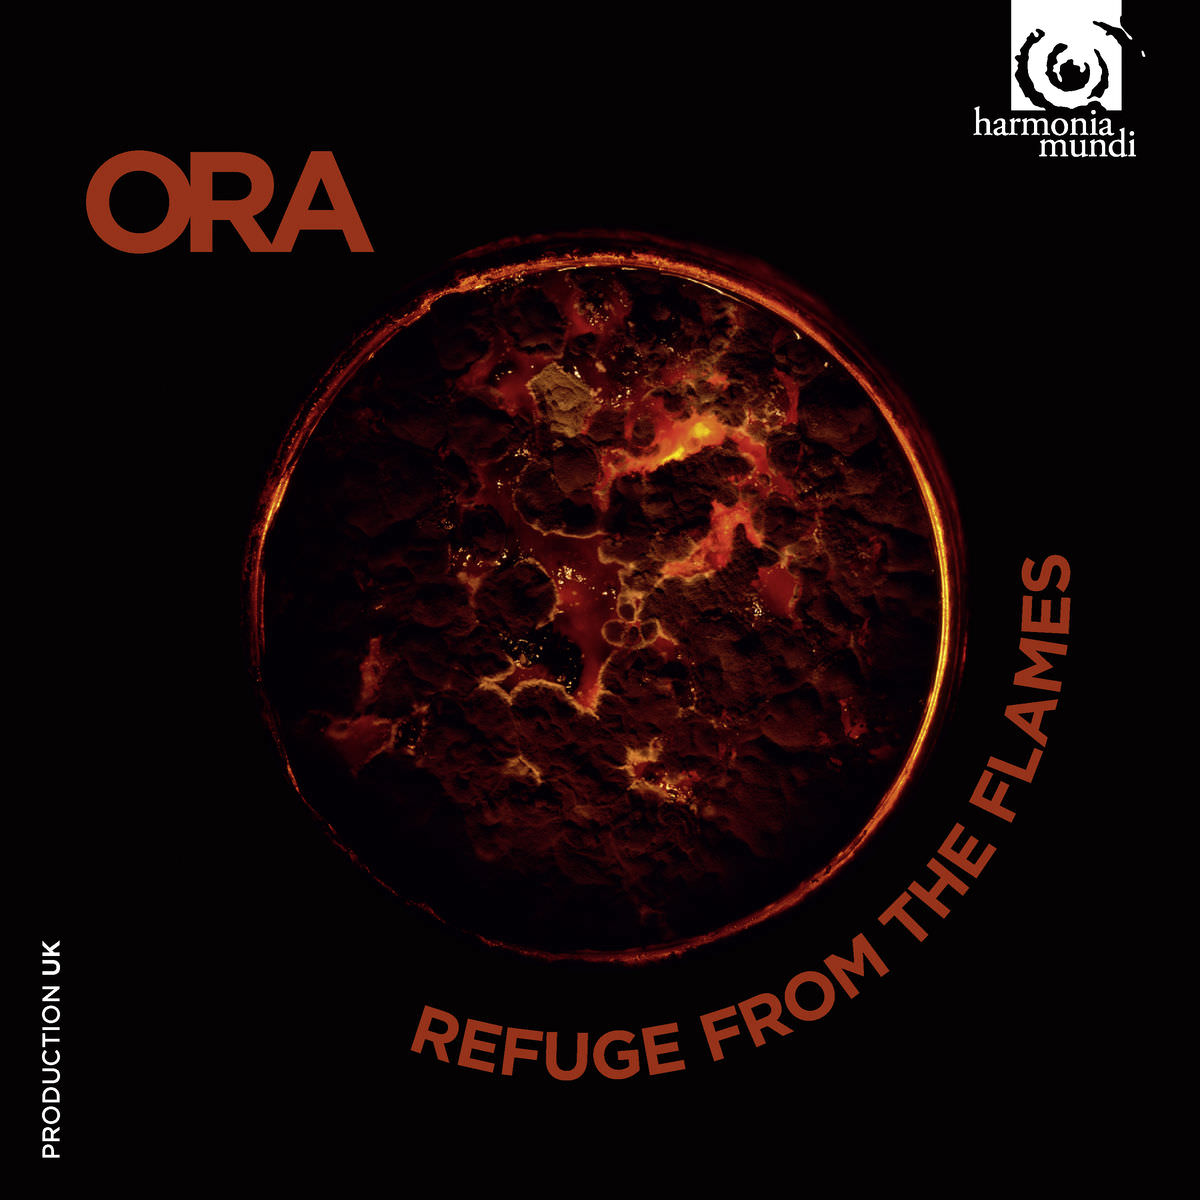 Ora - Refuge from the Flames, Miserere and the Savonarola Legacy (2016) [Qobuz FLAC 24bit/96kHz]